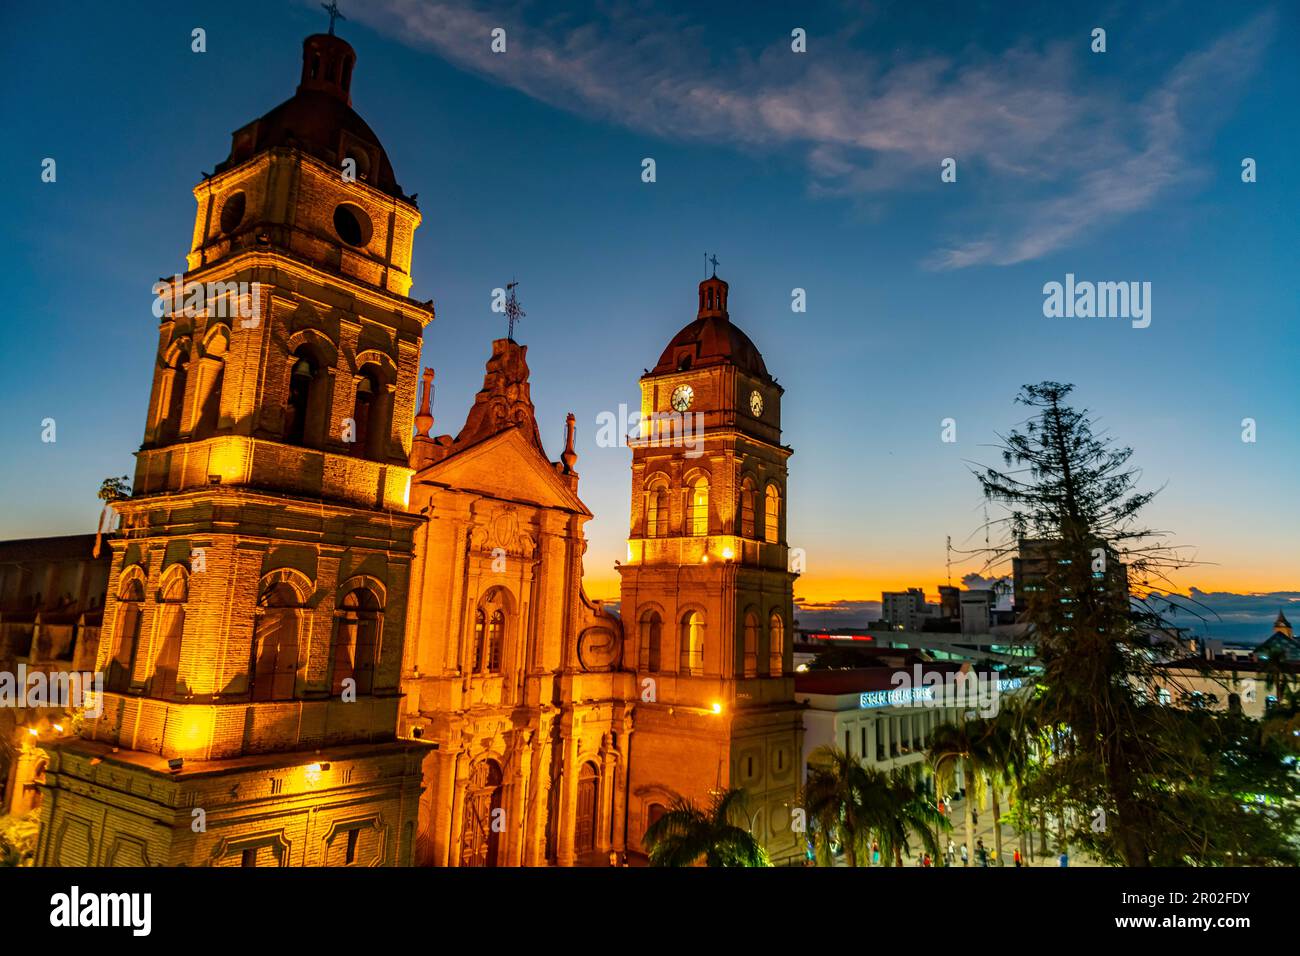 Cathedral Basilica of St. Lawrence at nighttime, Santa Cruz de la Sierra, Bolivia Stock Photo